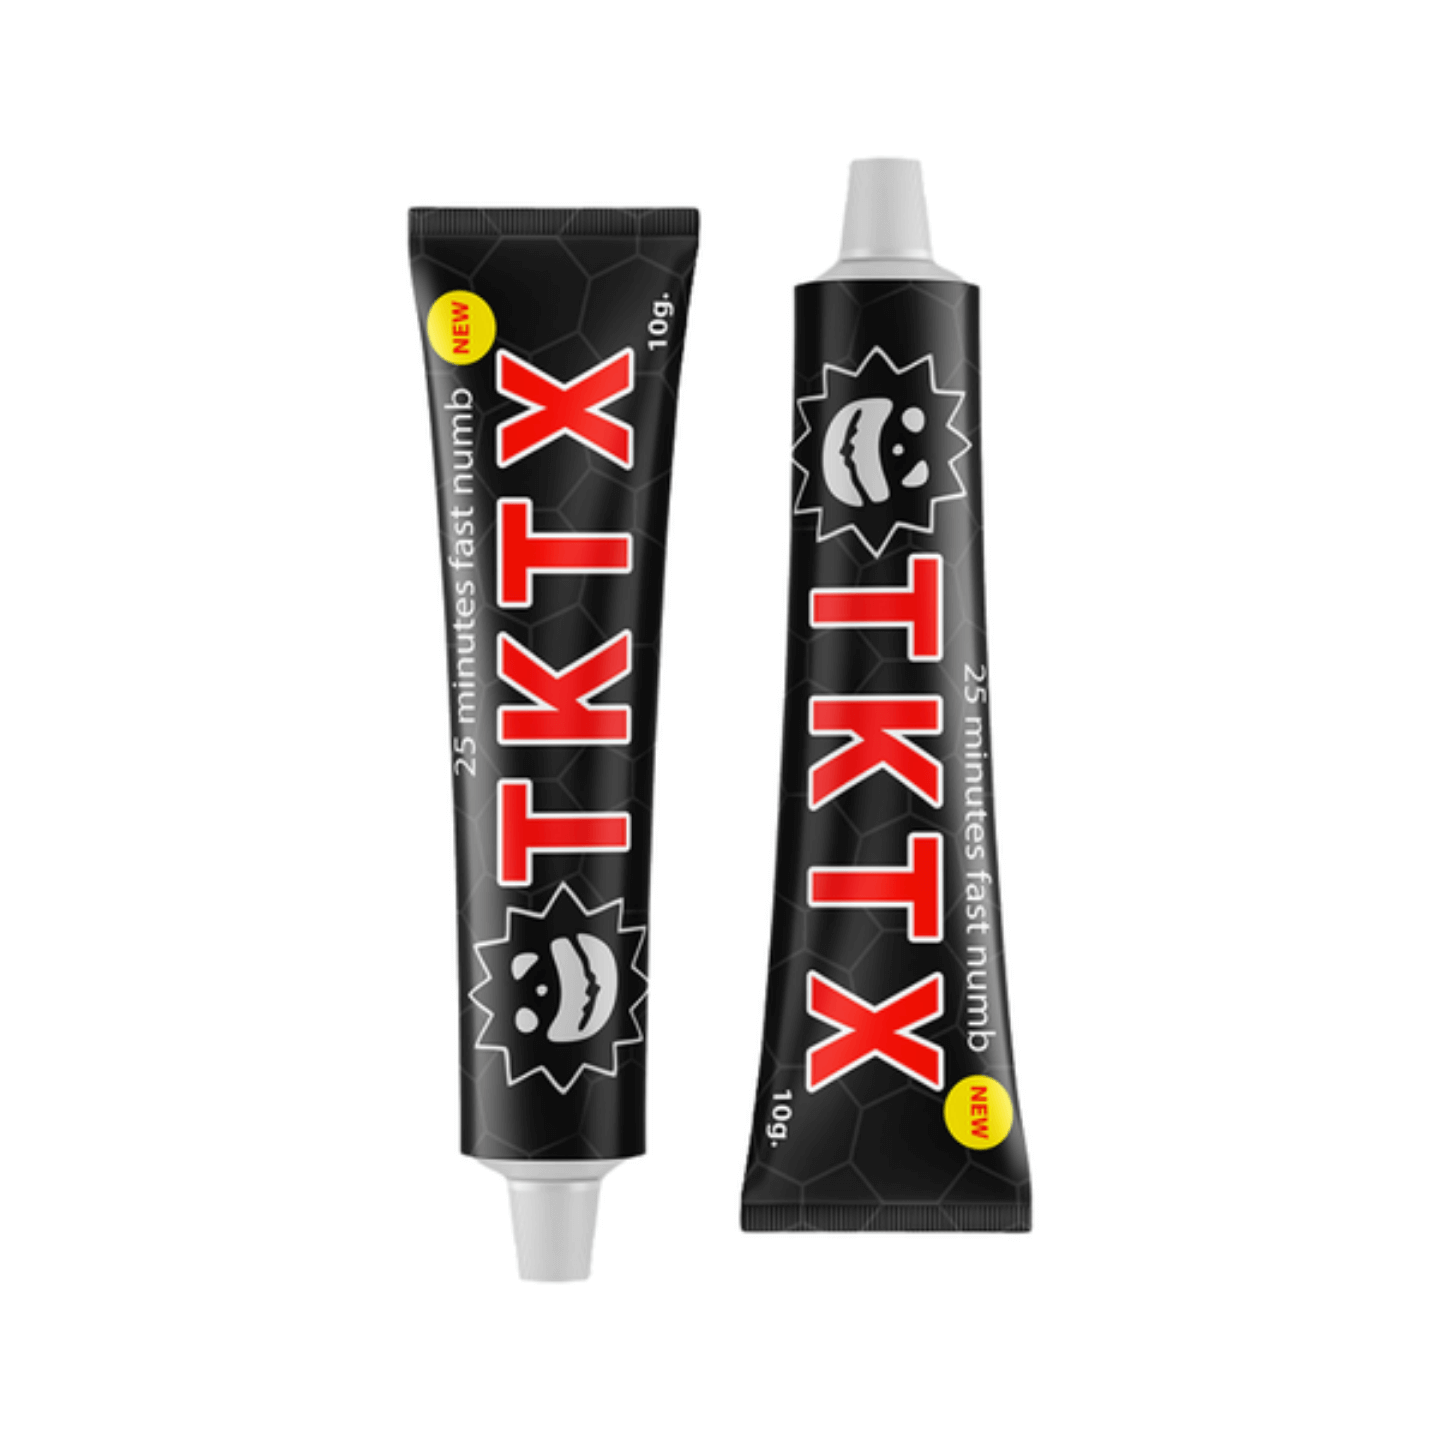 TKTX verdovingszalf crème zwart 40% 3 Halen = 2 Betalen